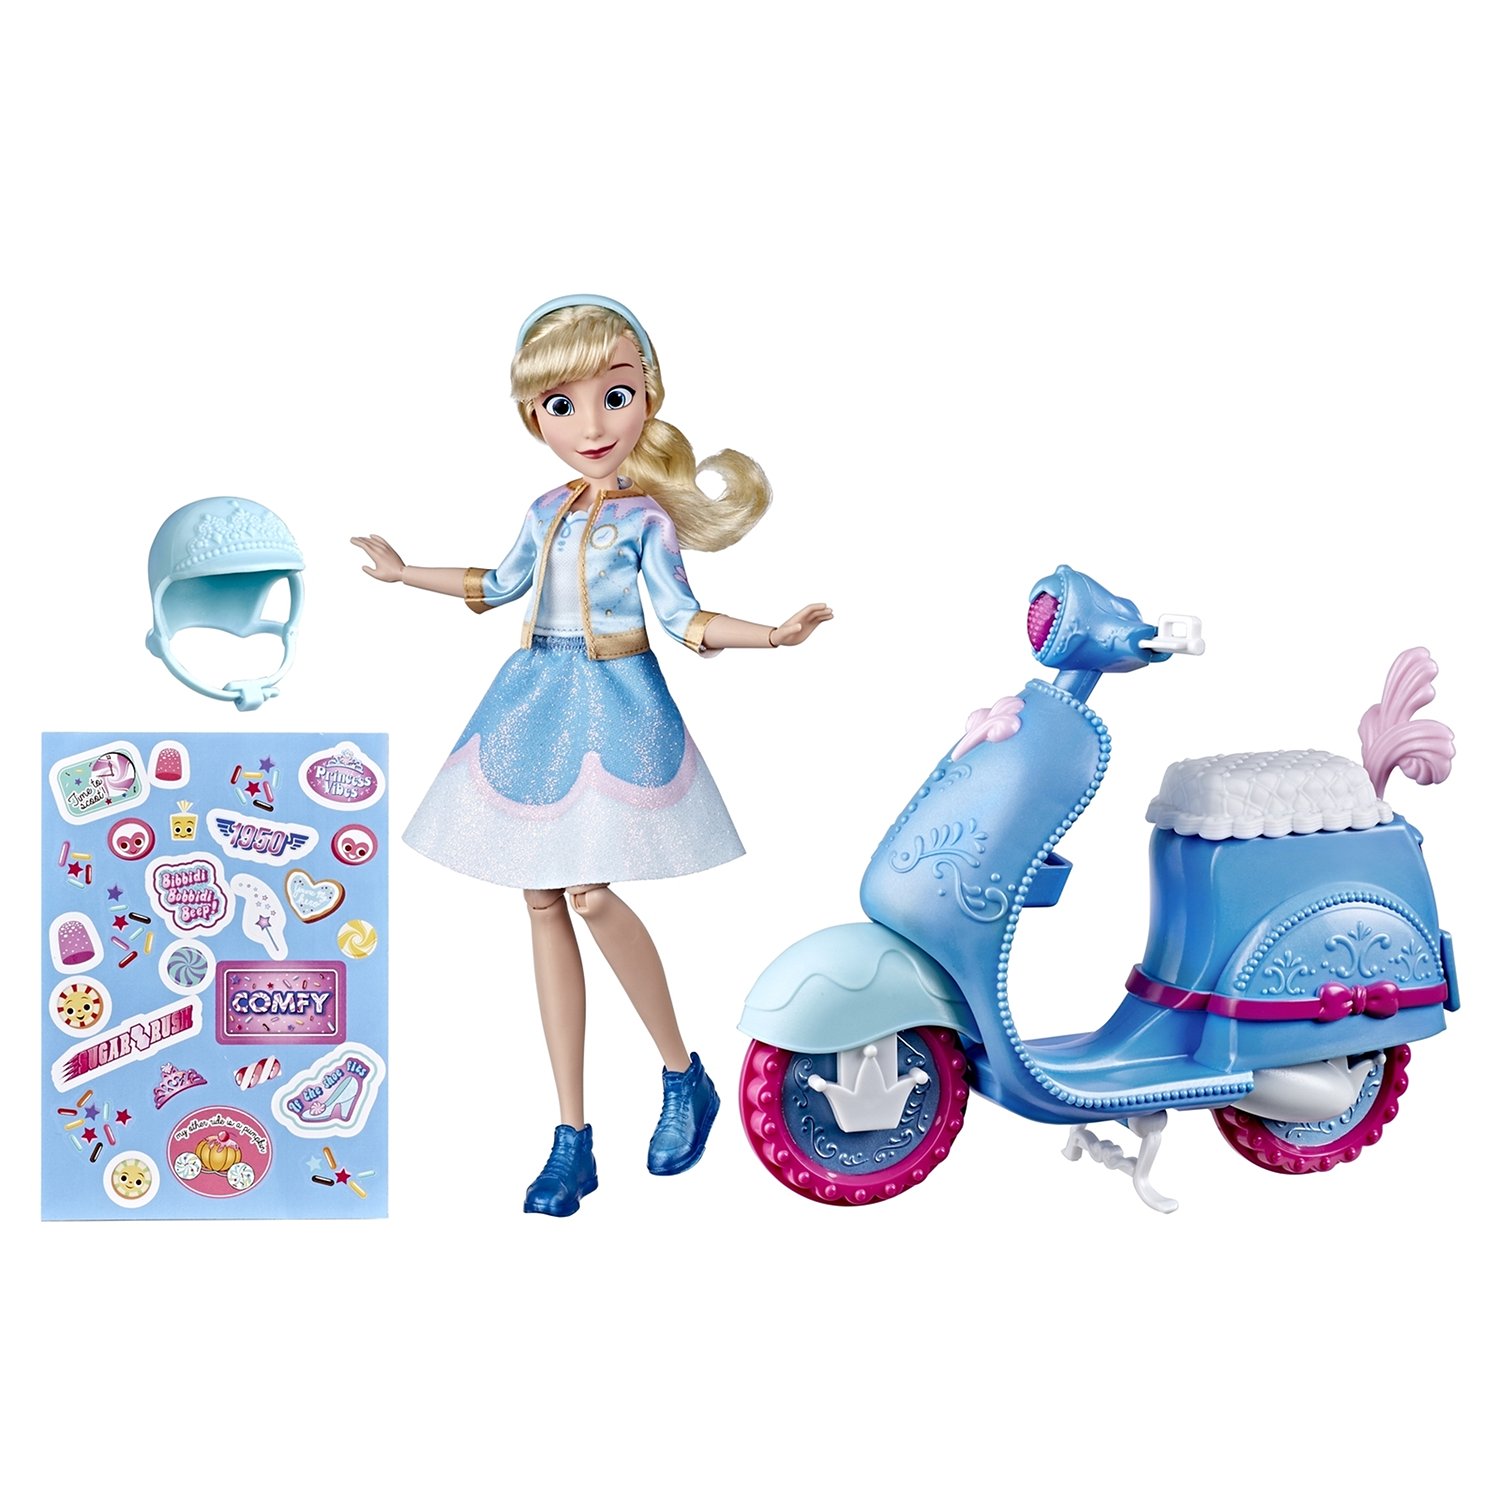 Кукла Disney Princess - Комфи Скутер  